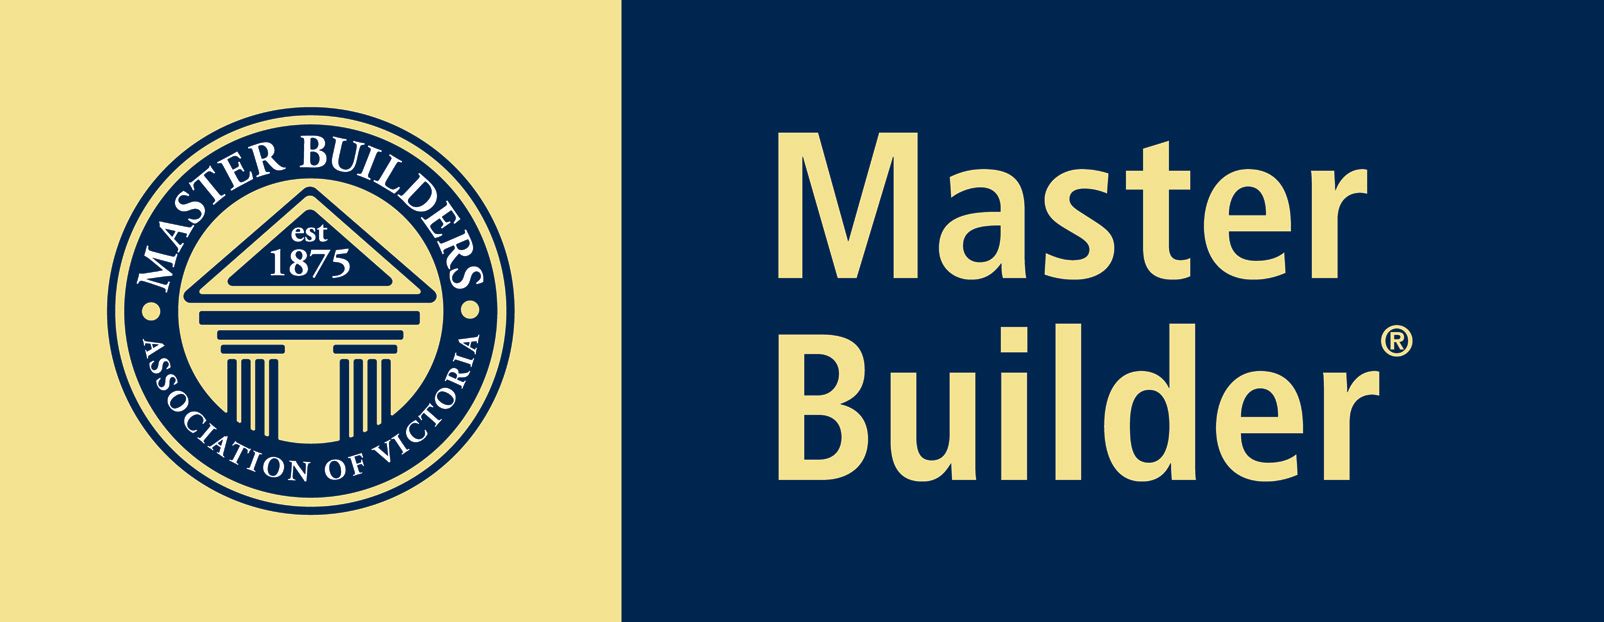 master build logo